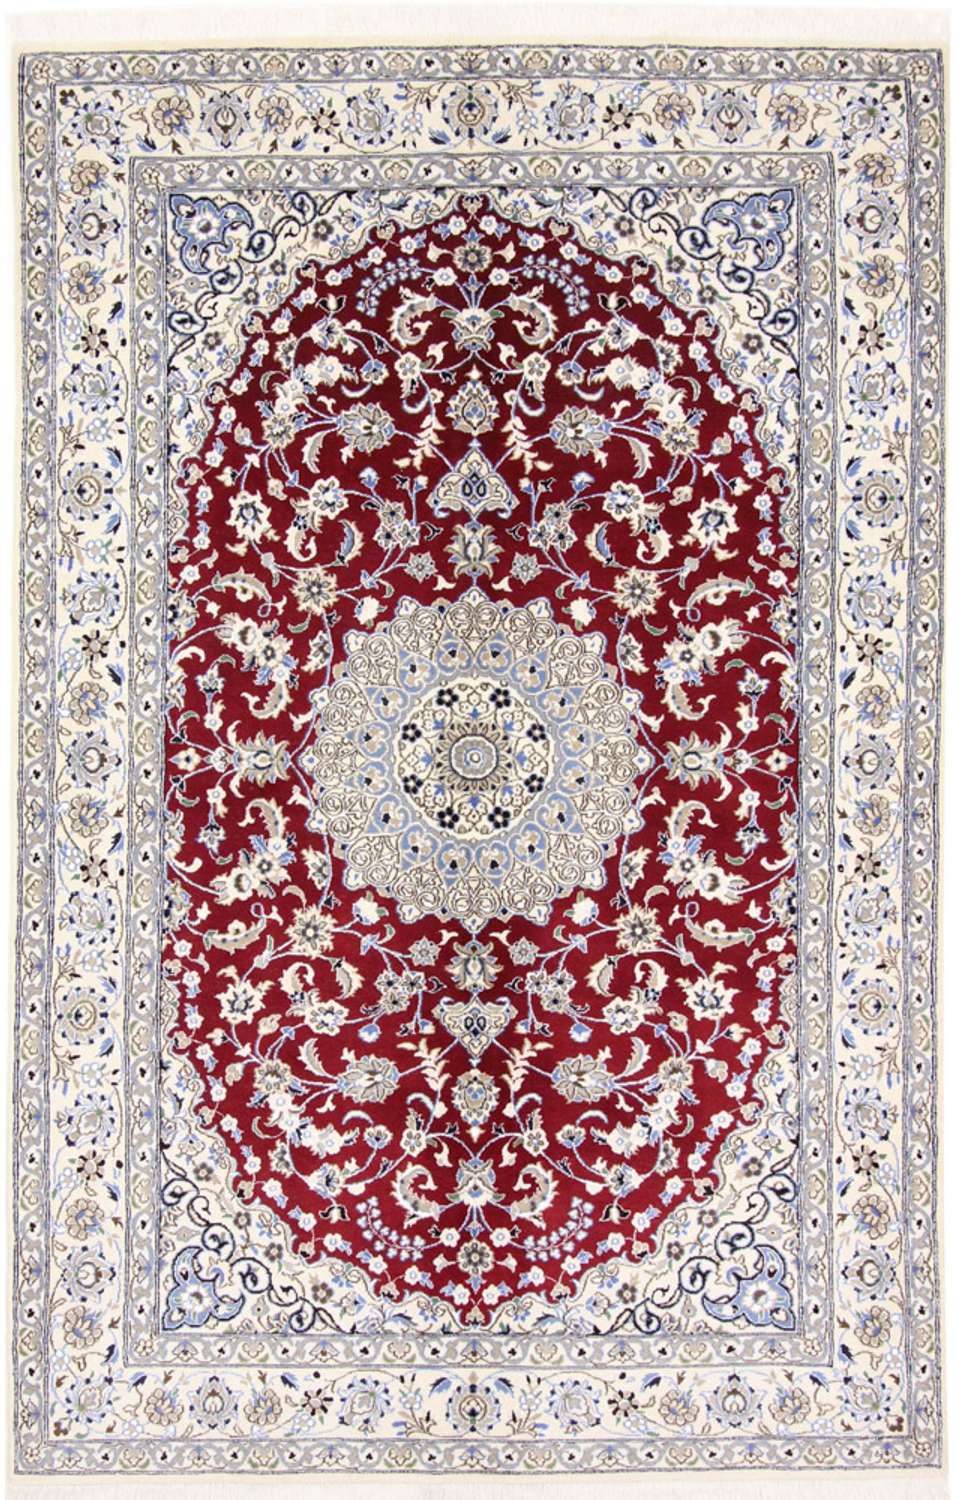 Tapis persan - Nain - Royal - 240 x 158 cm - rouge